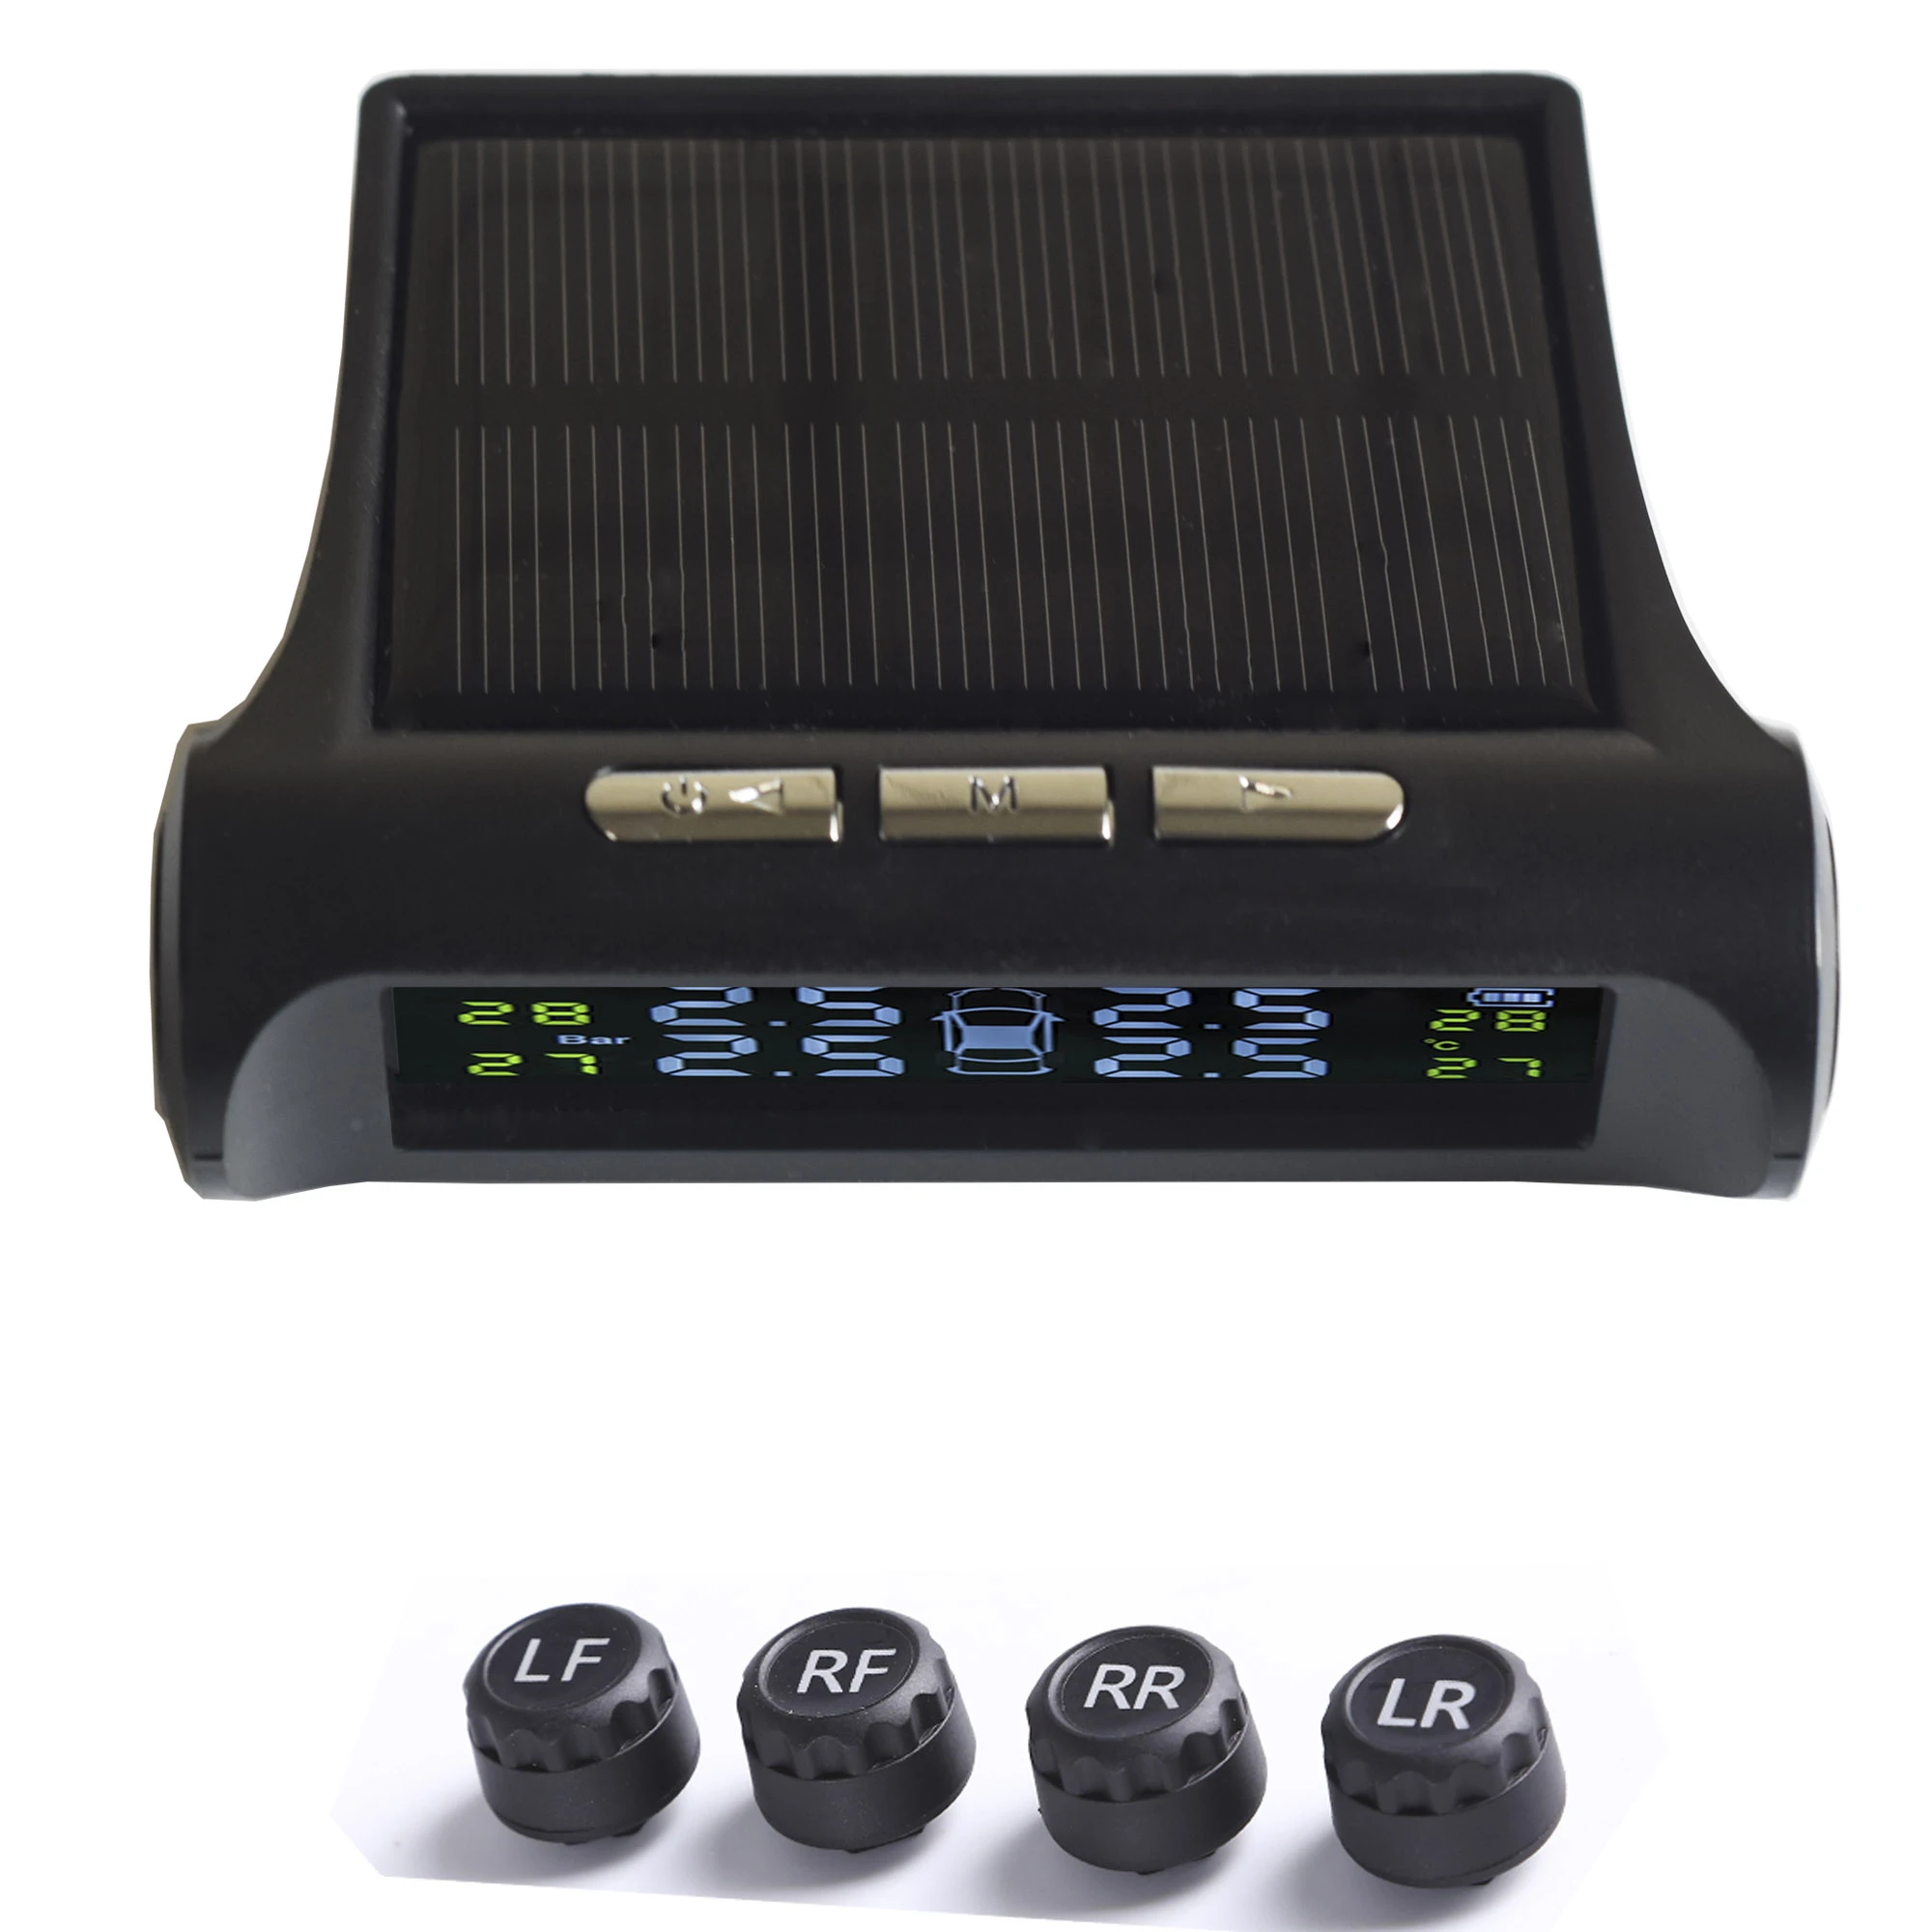 tire pressure sensors Solar power supply Tire temperature monitorautomatic sleep when parked solar tpms